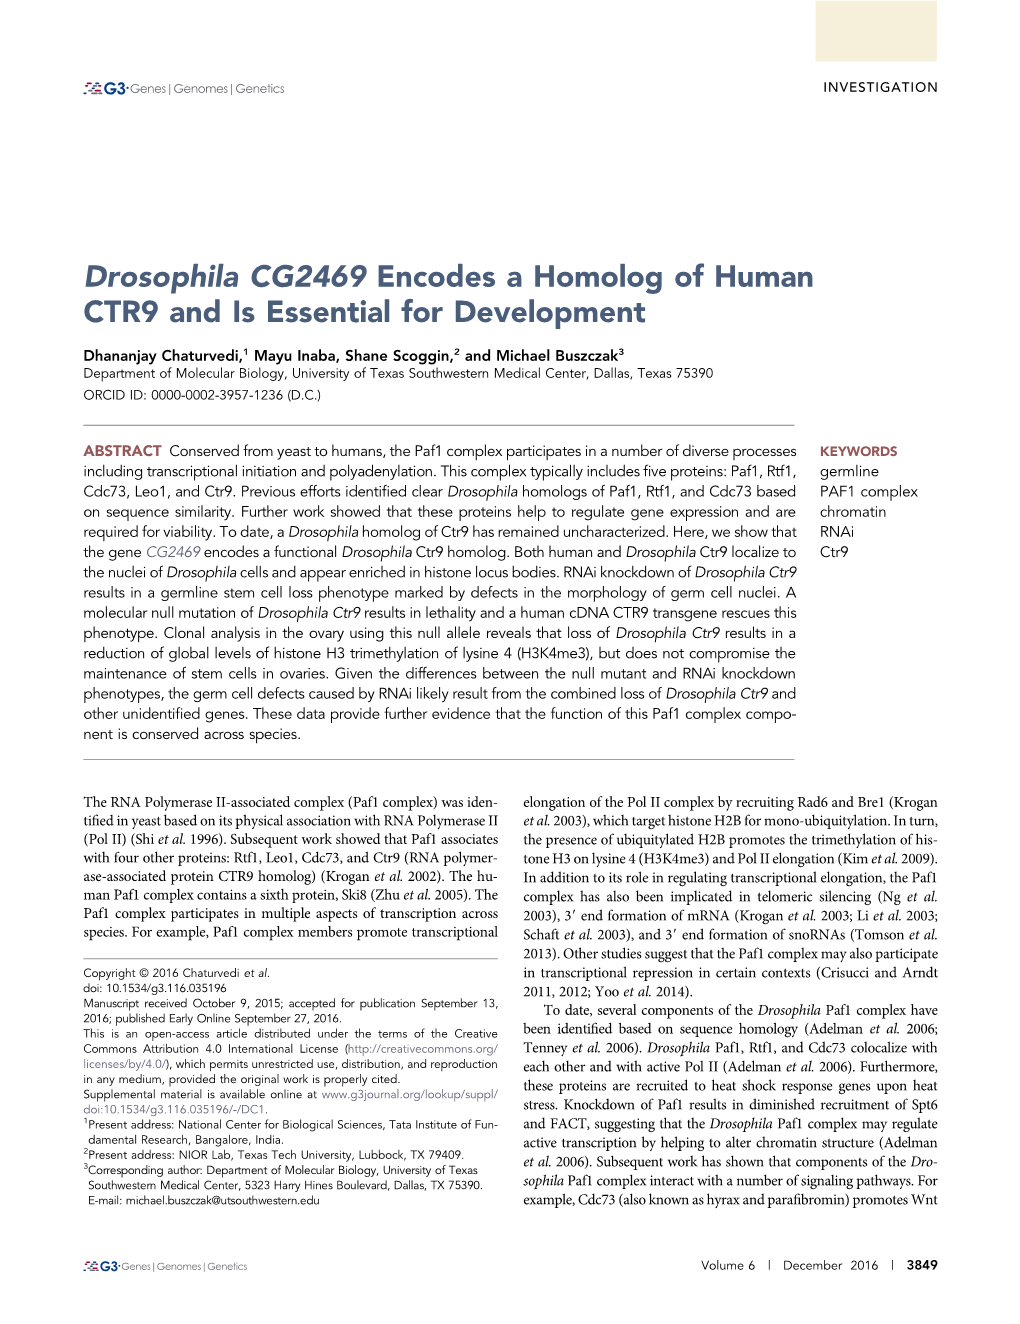 Drosophila CG2469 Encodes a Homolog of Human CTR9 and Is Essential for Development